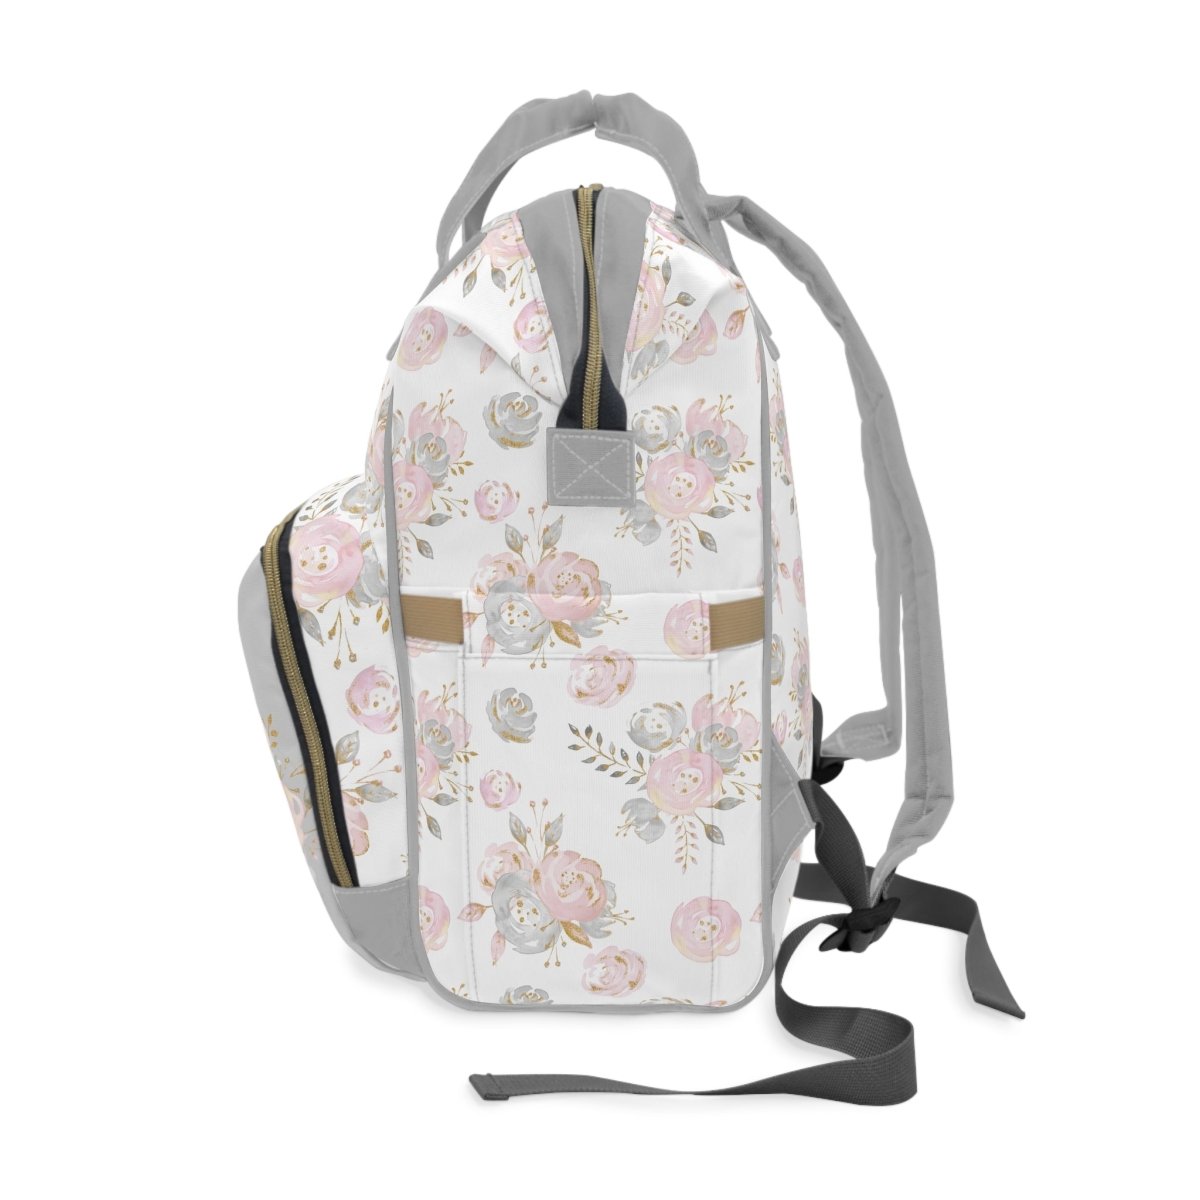 Blush Gold Floral Personalized Backpack Diaper Bag - Blush Gold Floral, gender_girl, text